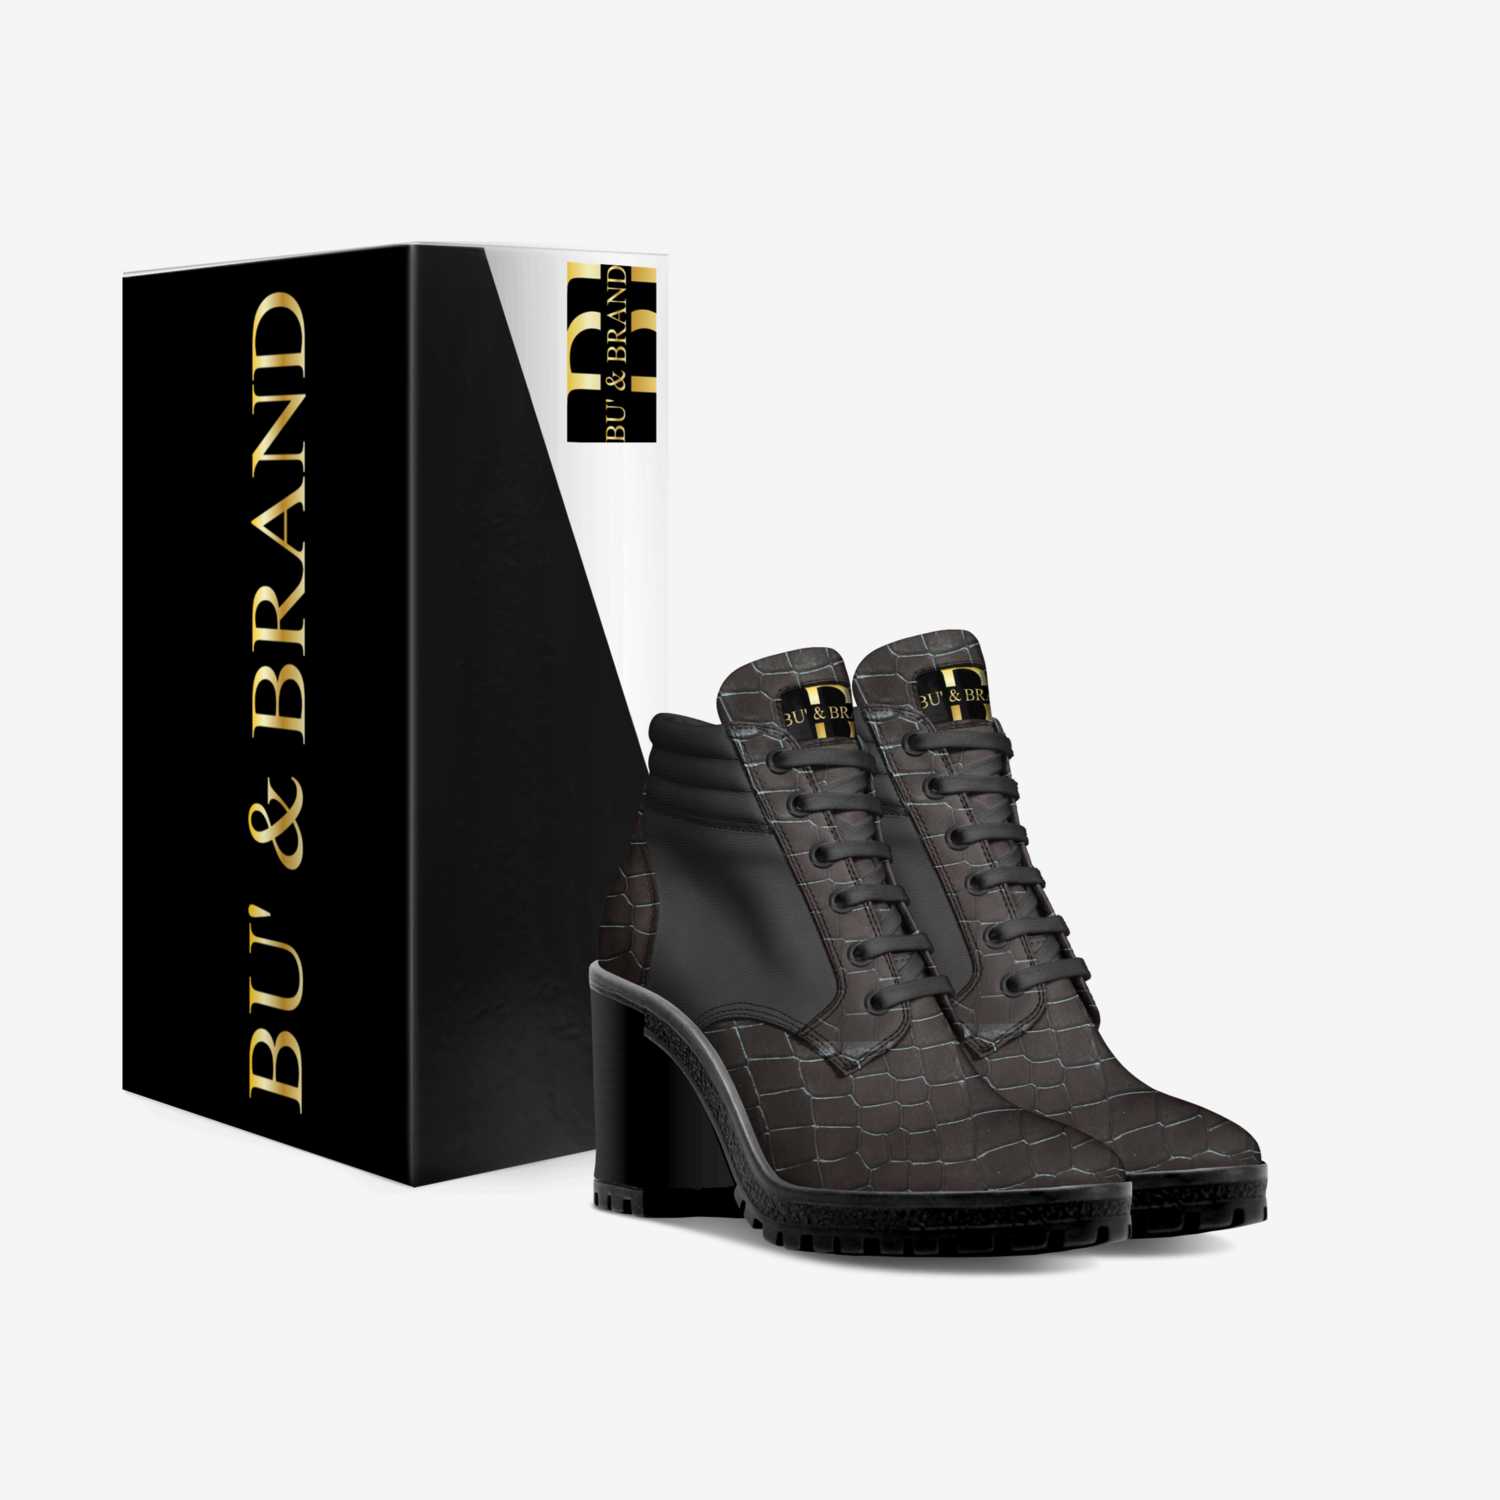 Bu' Rocks B/B custom made in Italy shoes by X Bu Italy | Box view